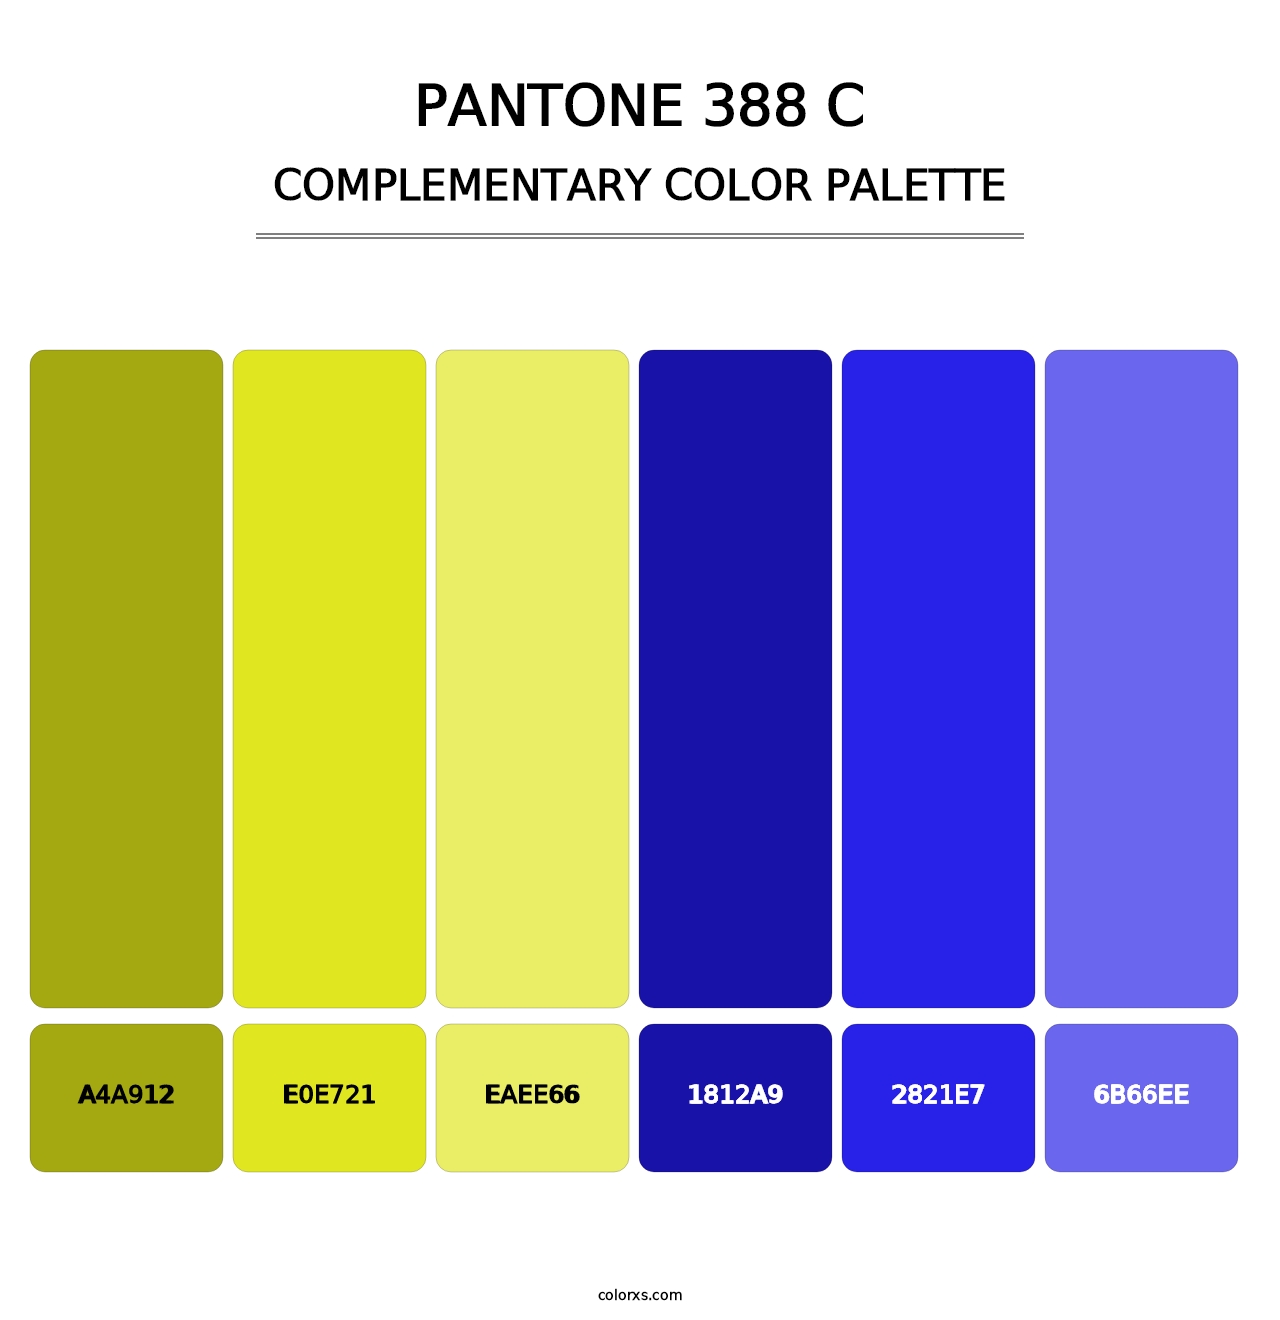 PANTONE 388 C - Complementary Color Palette